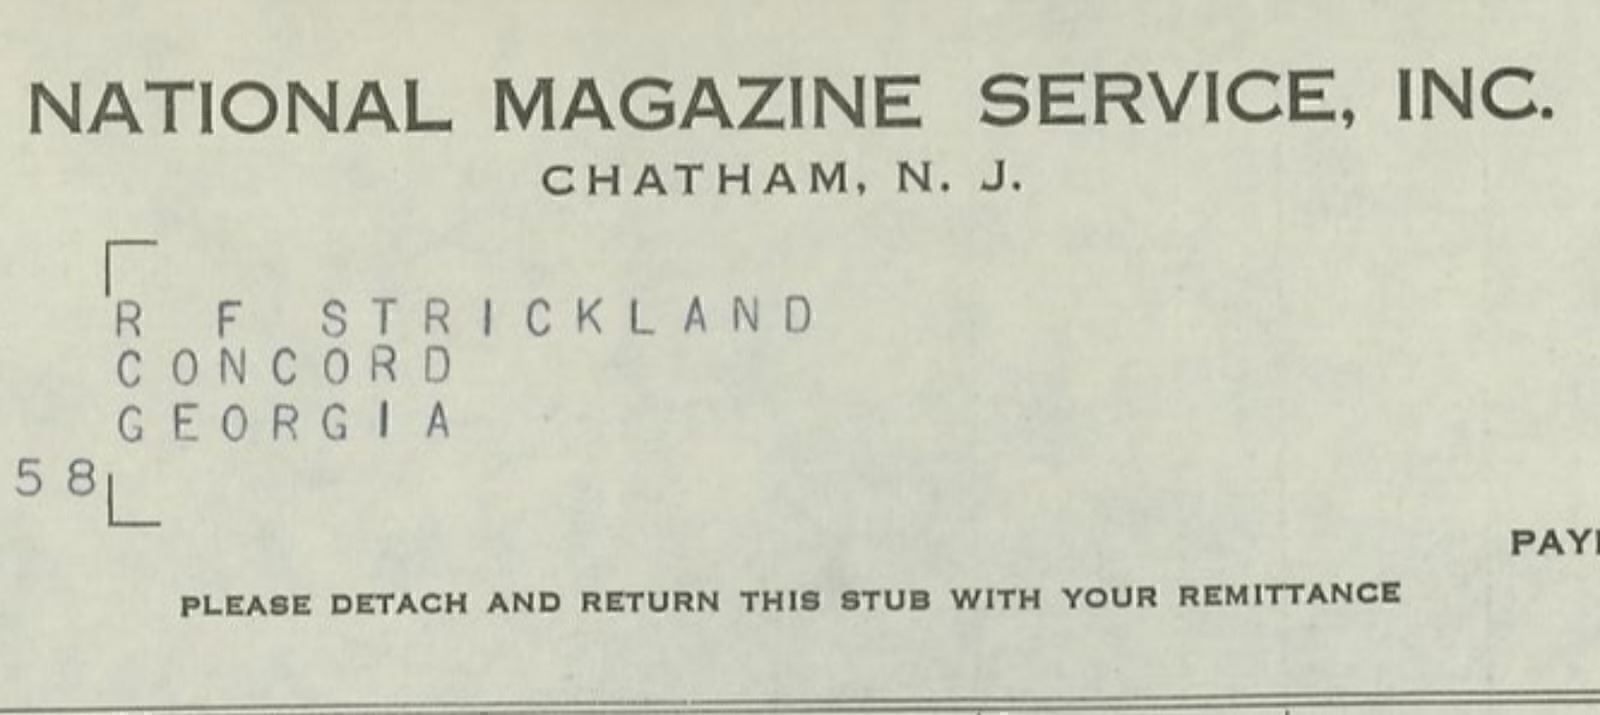 1958 National Magazine Service Inc. Chatham N.J.  Invoice 368